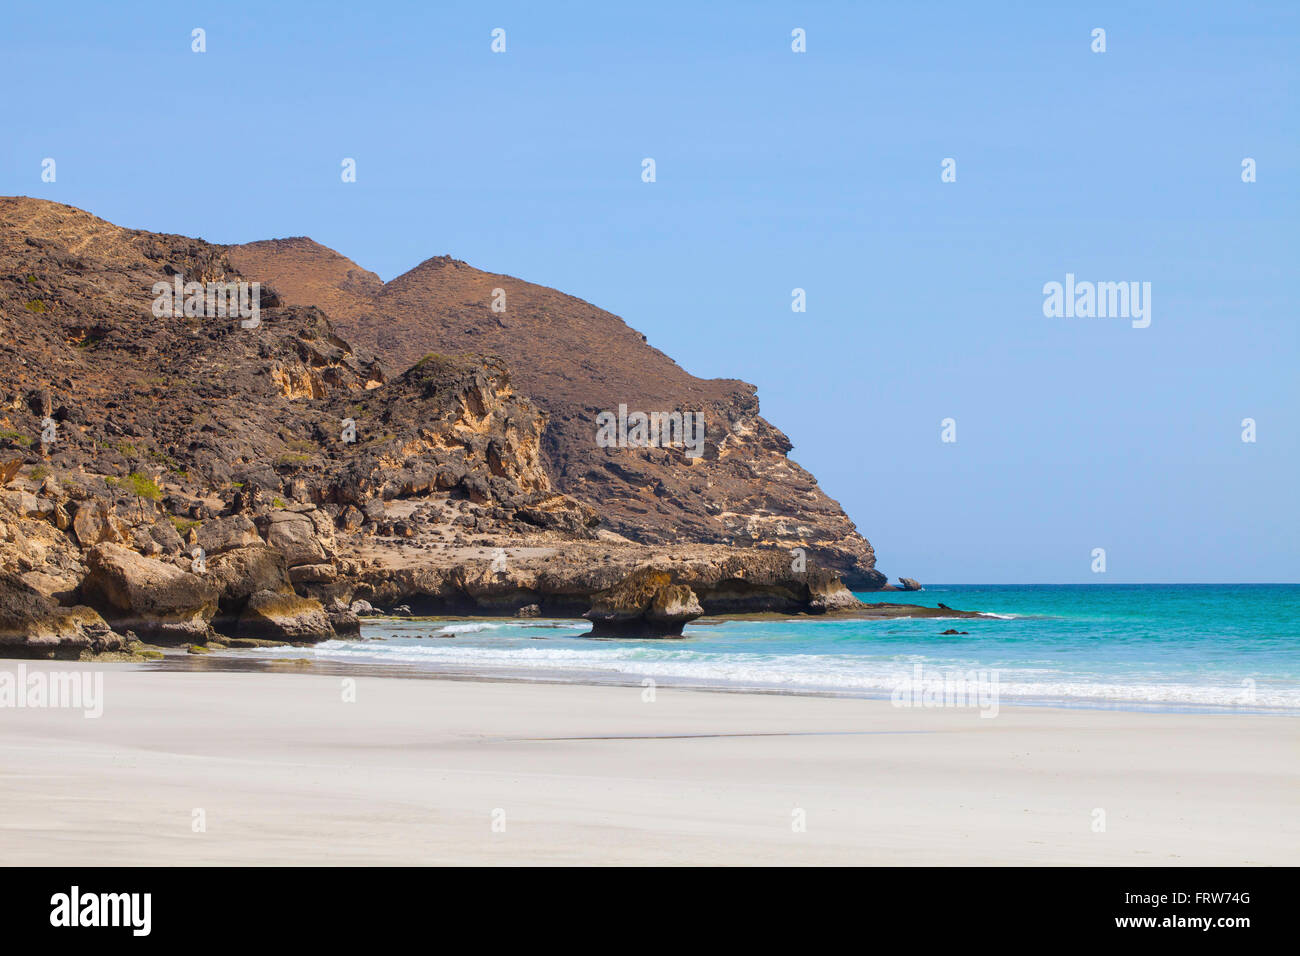 Imagen de la costa cerca de Al Mughsayl, Omán. Foto de stock